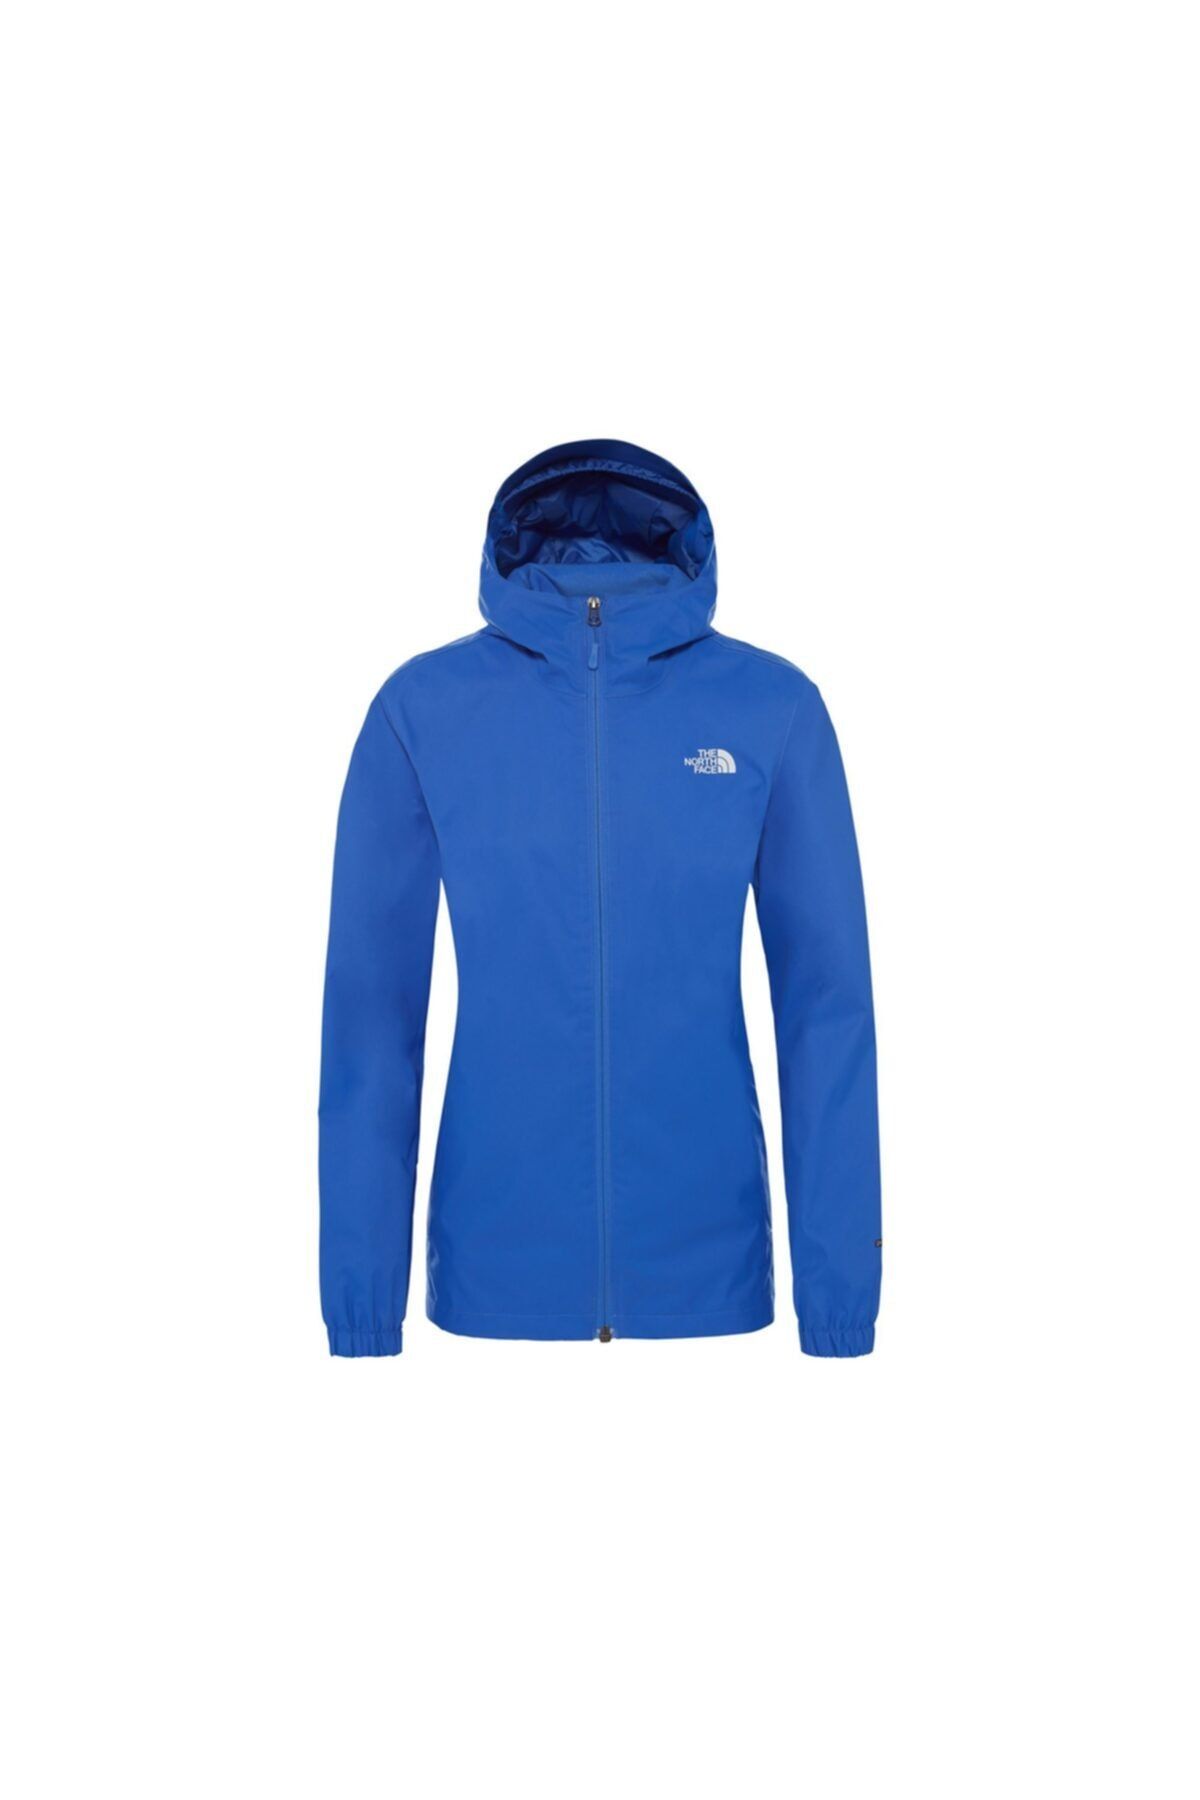 The North Face Kadın Outdoor Ceketi Mavi W Quest Jacket T0a8bah4e